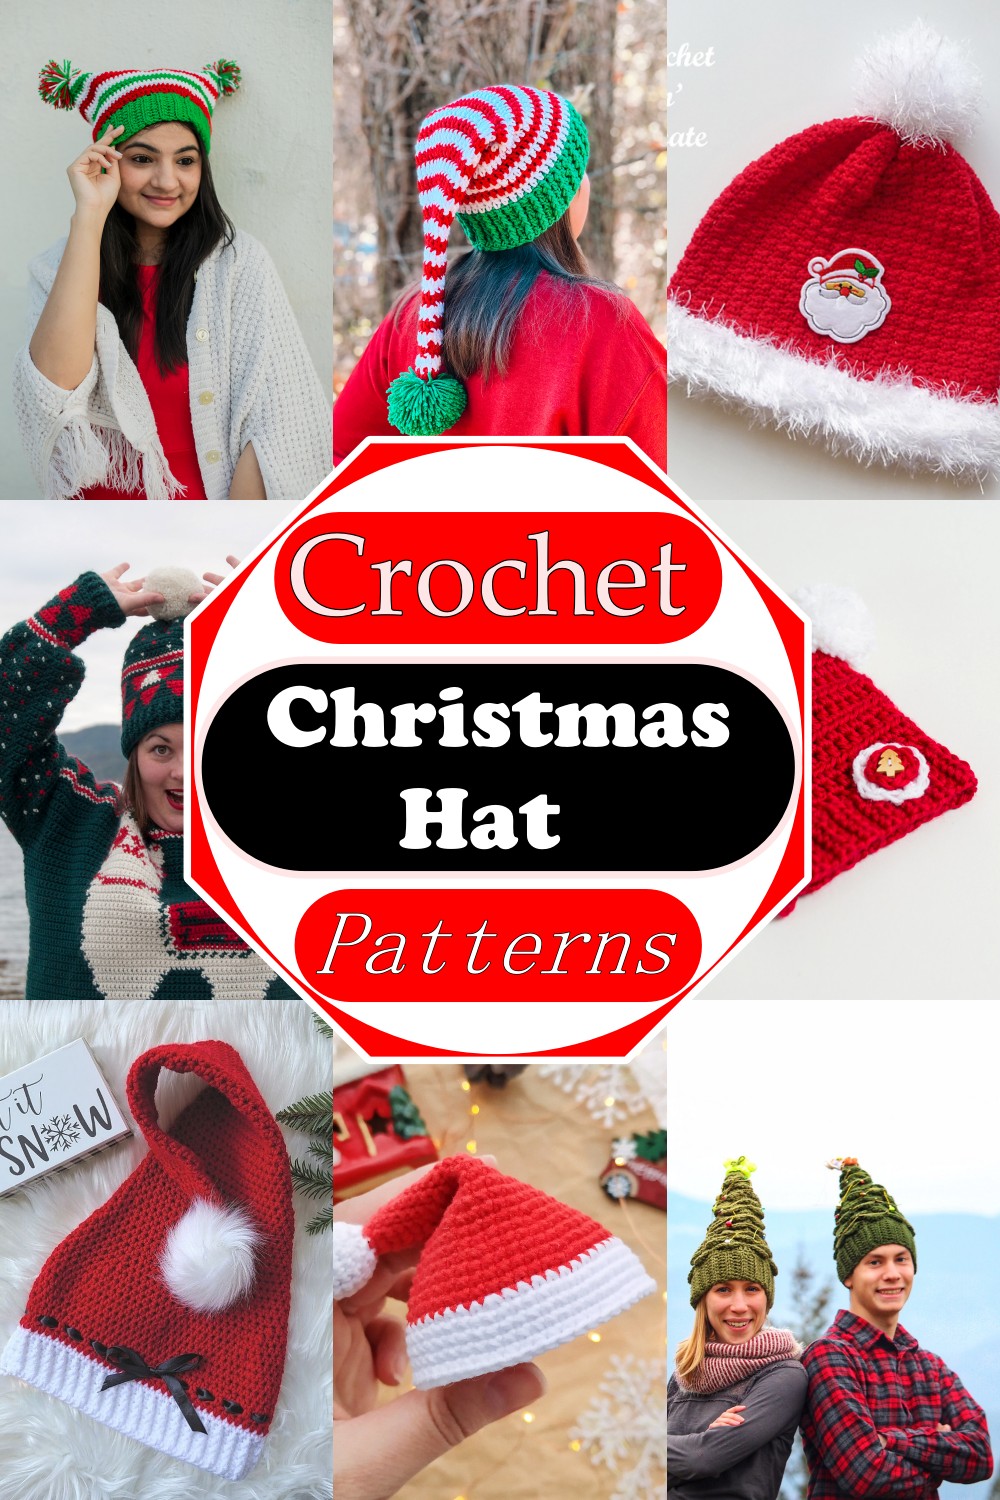 Free Crochet Christmas Hat Patterns